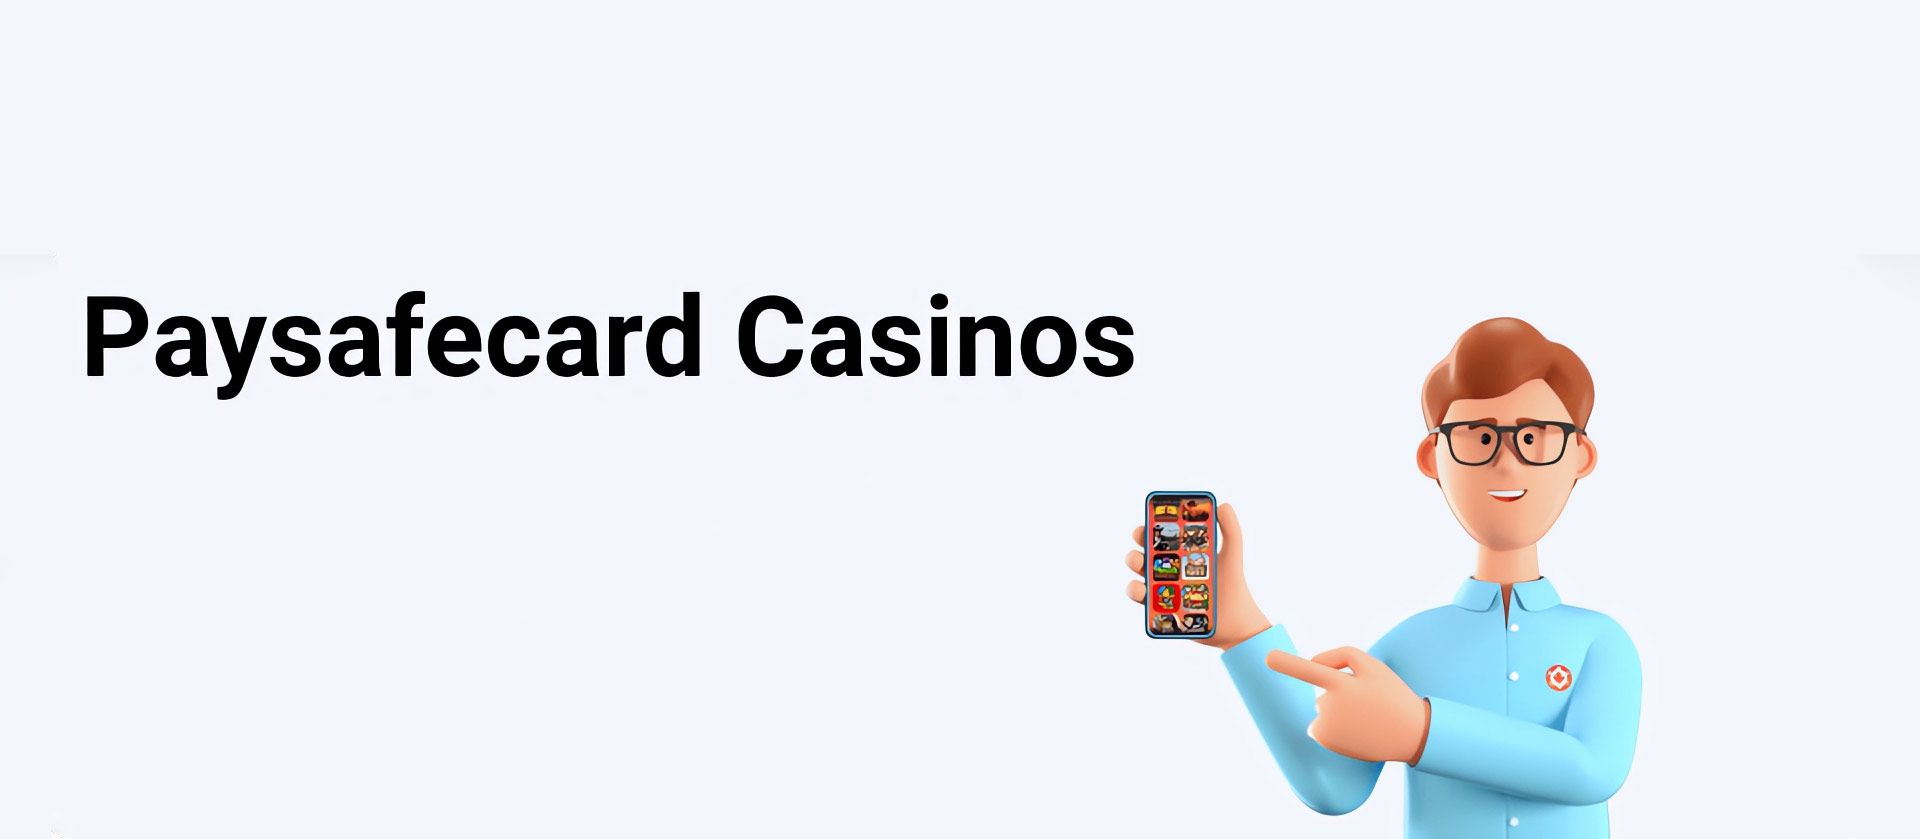 Mobile PaySafeCard casinos in Canada.